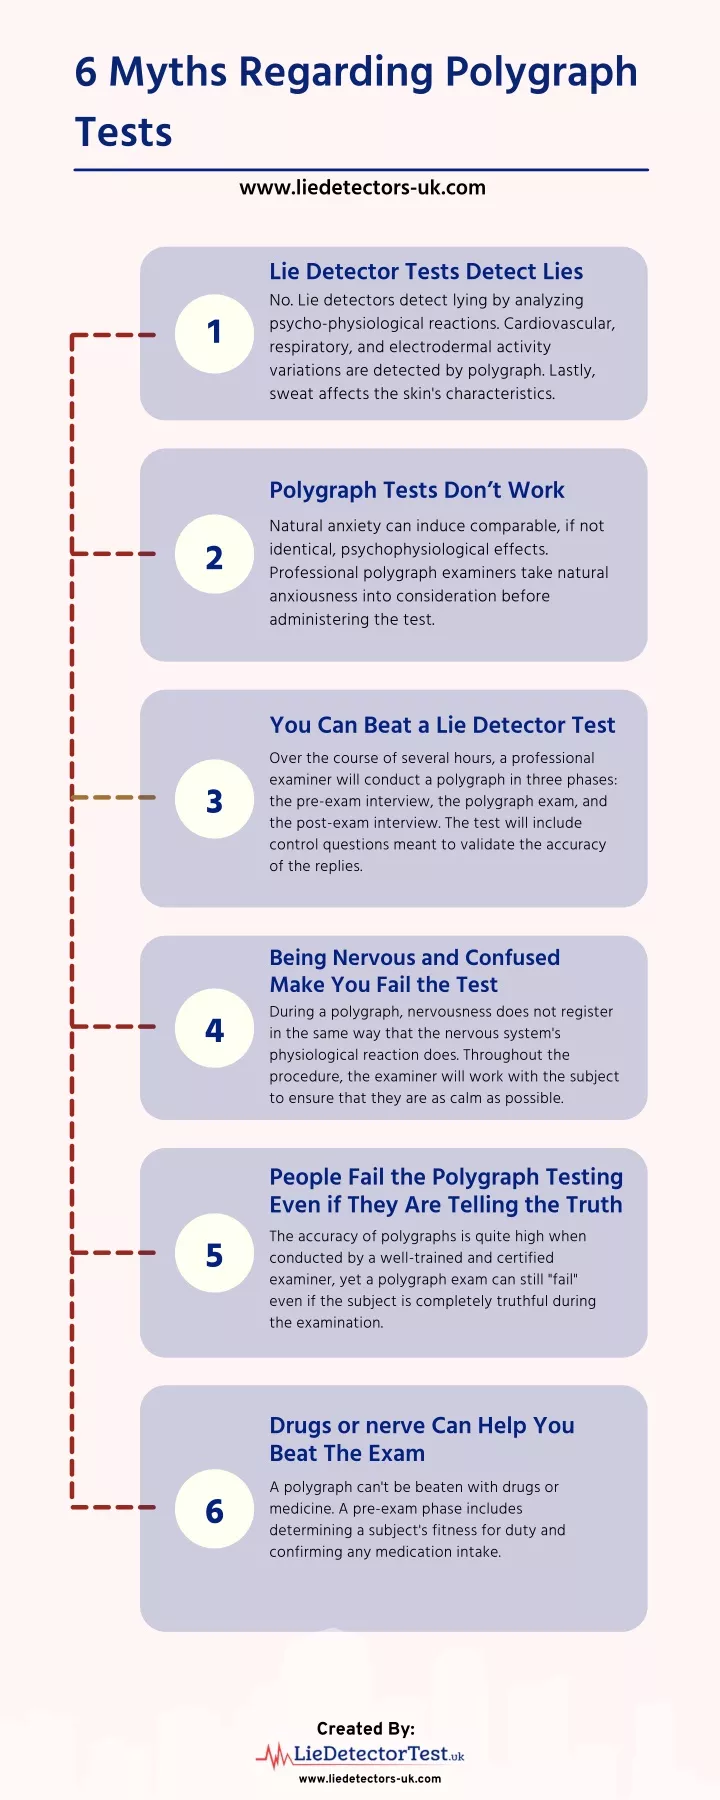 6 myths regarding polygraph tests